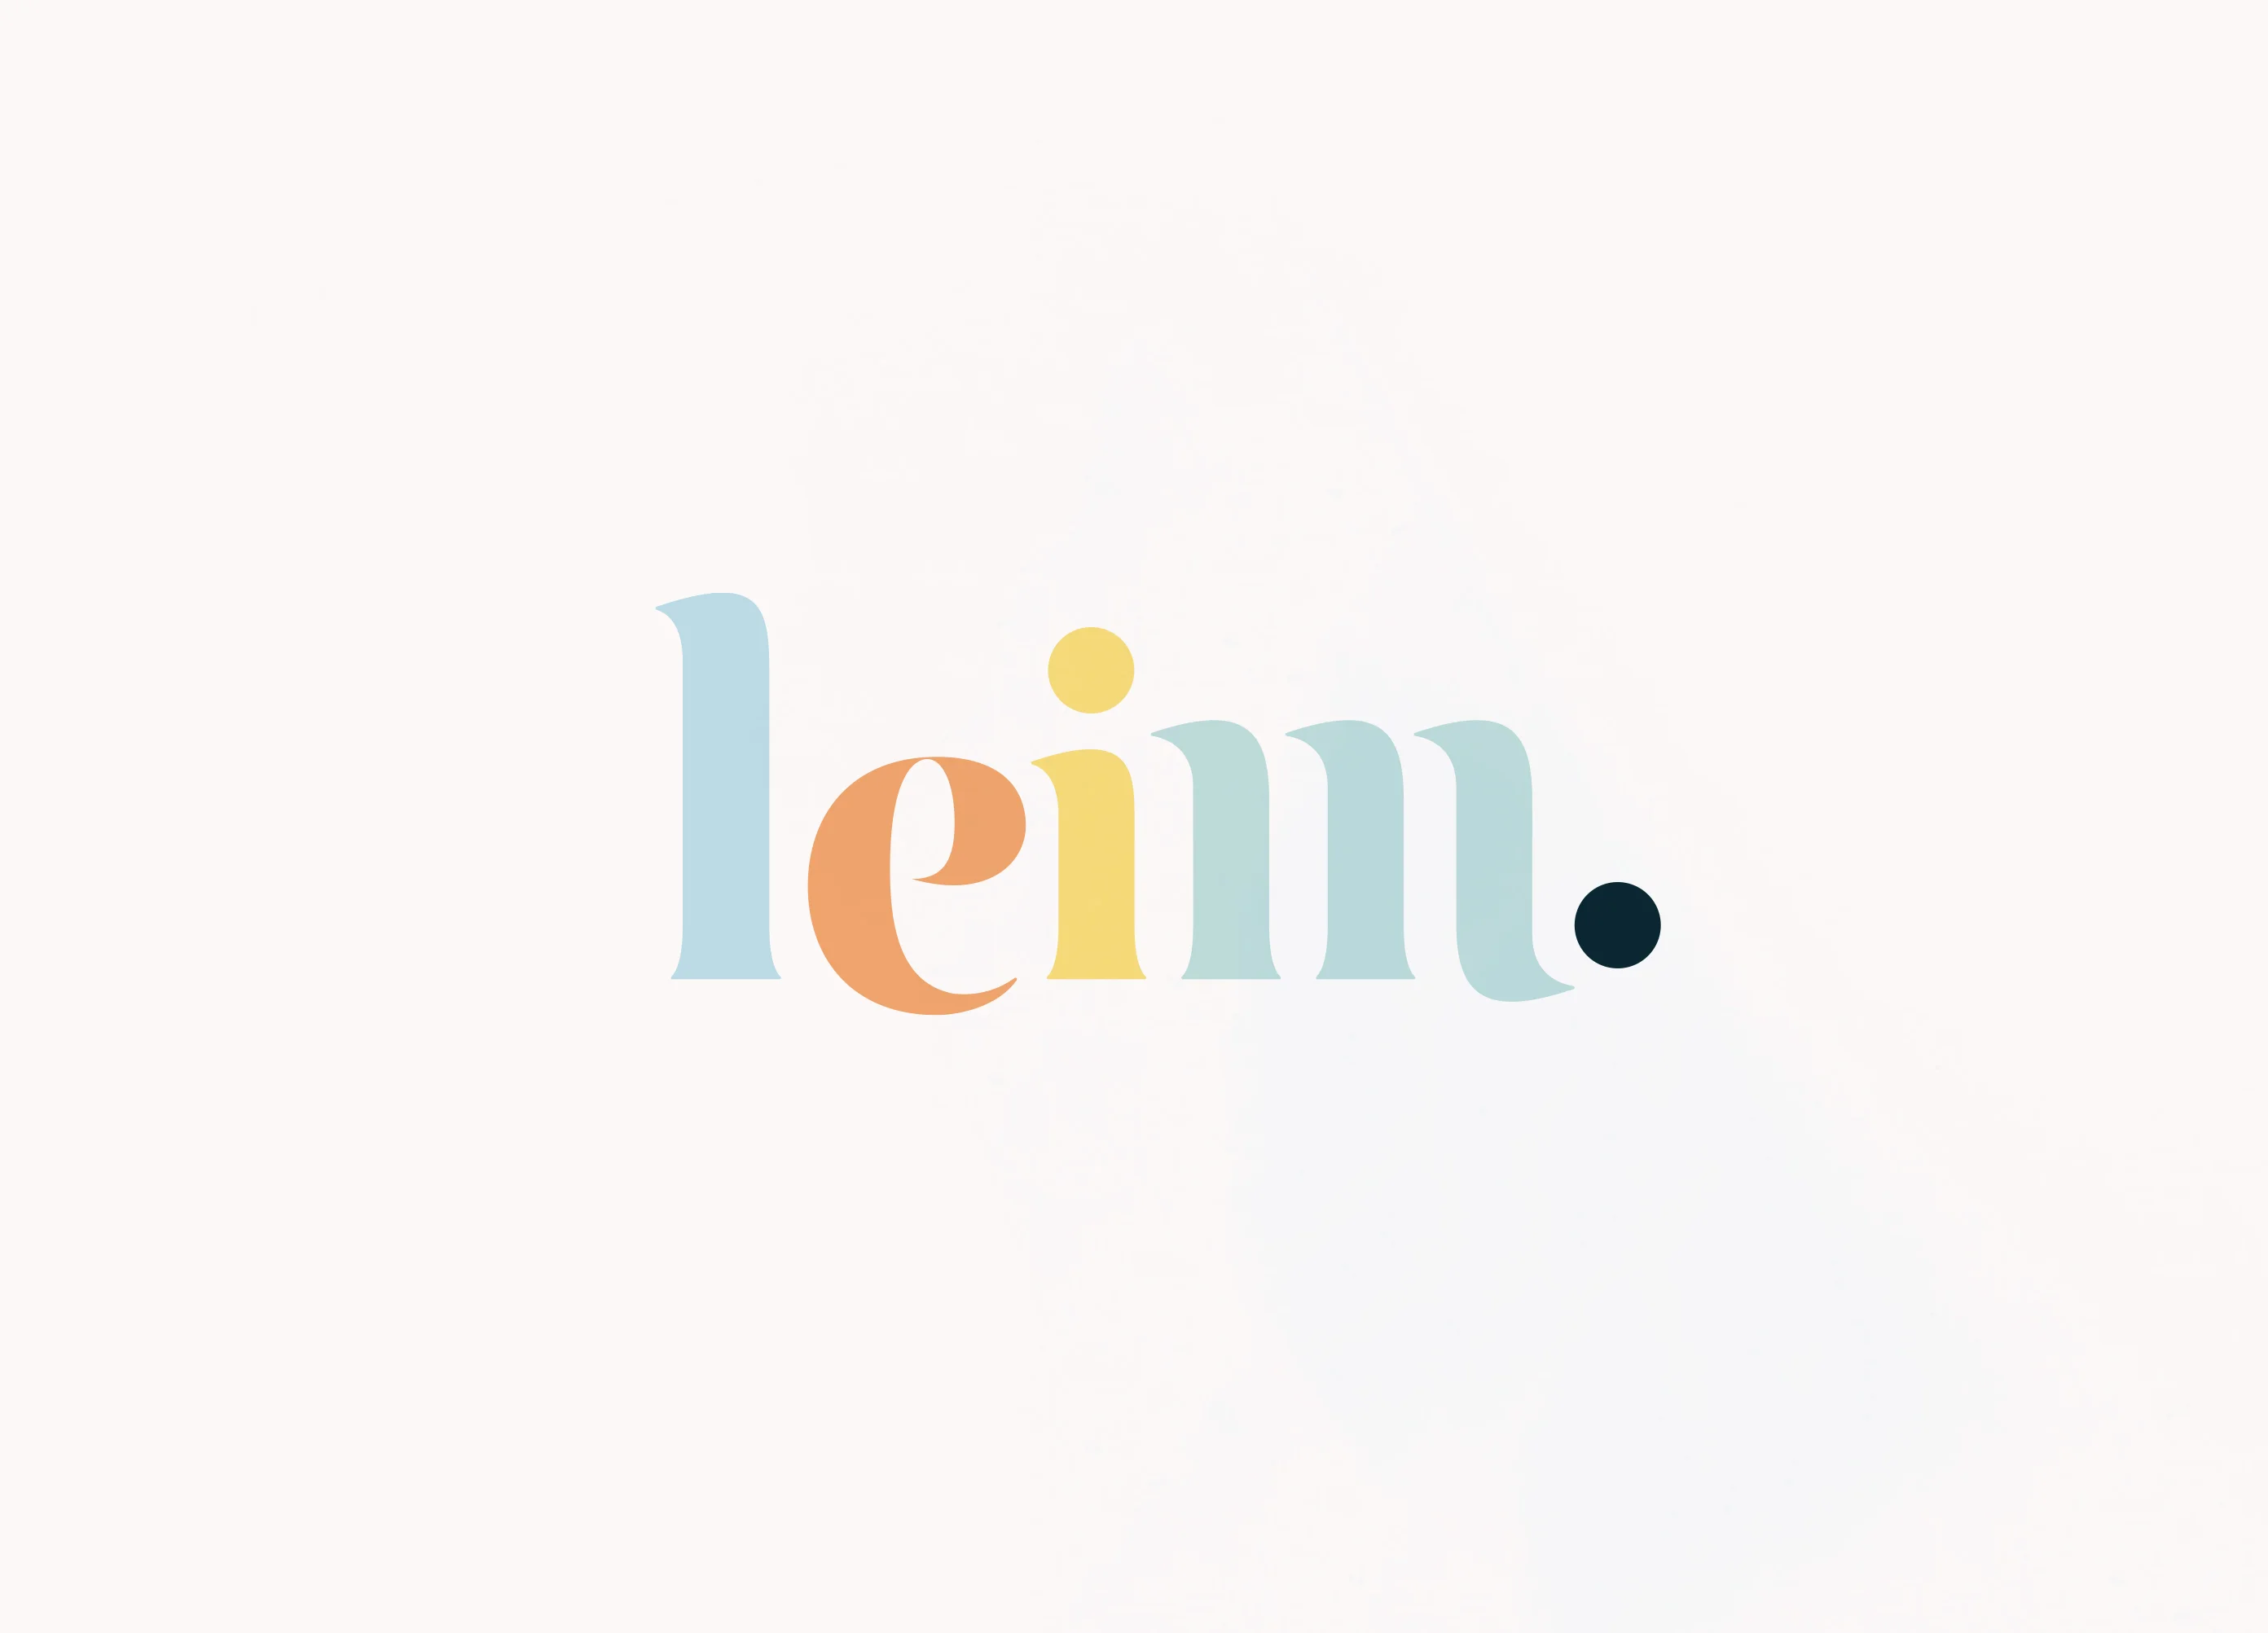 Leim Logo a multicoloured bespoke logo typeface designed by Petits Papiers